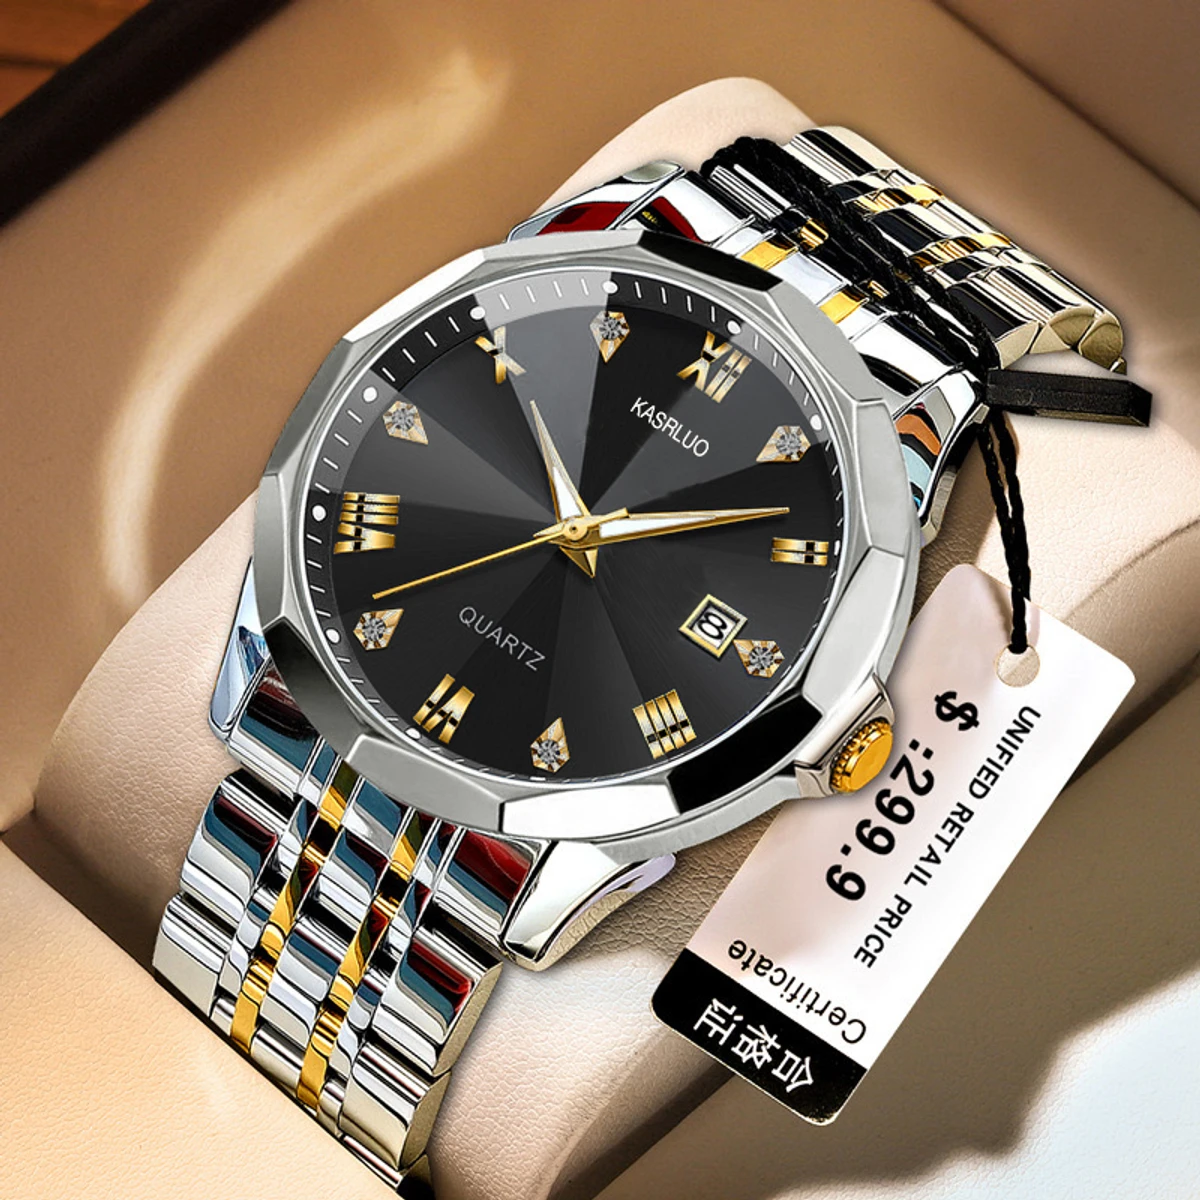 KASRLUO New Fashion Quartz Watch for Men Stainless Steel Waterproof Luminous Date Mens Watches Top Brand Luxury Clock- Silver & Black